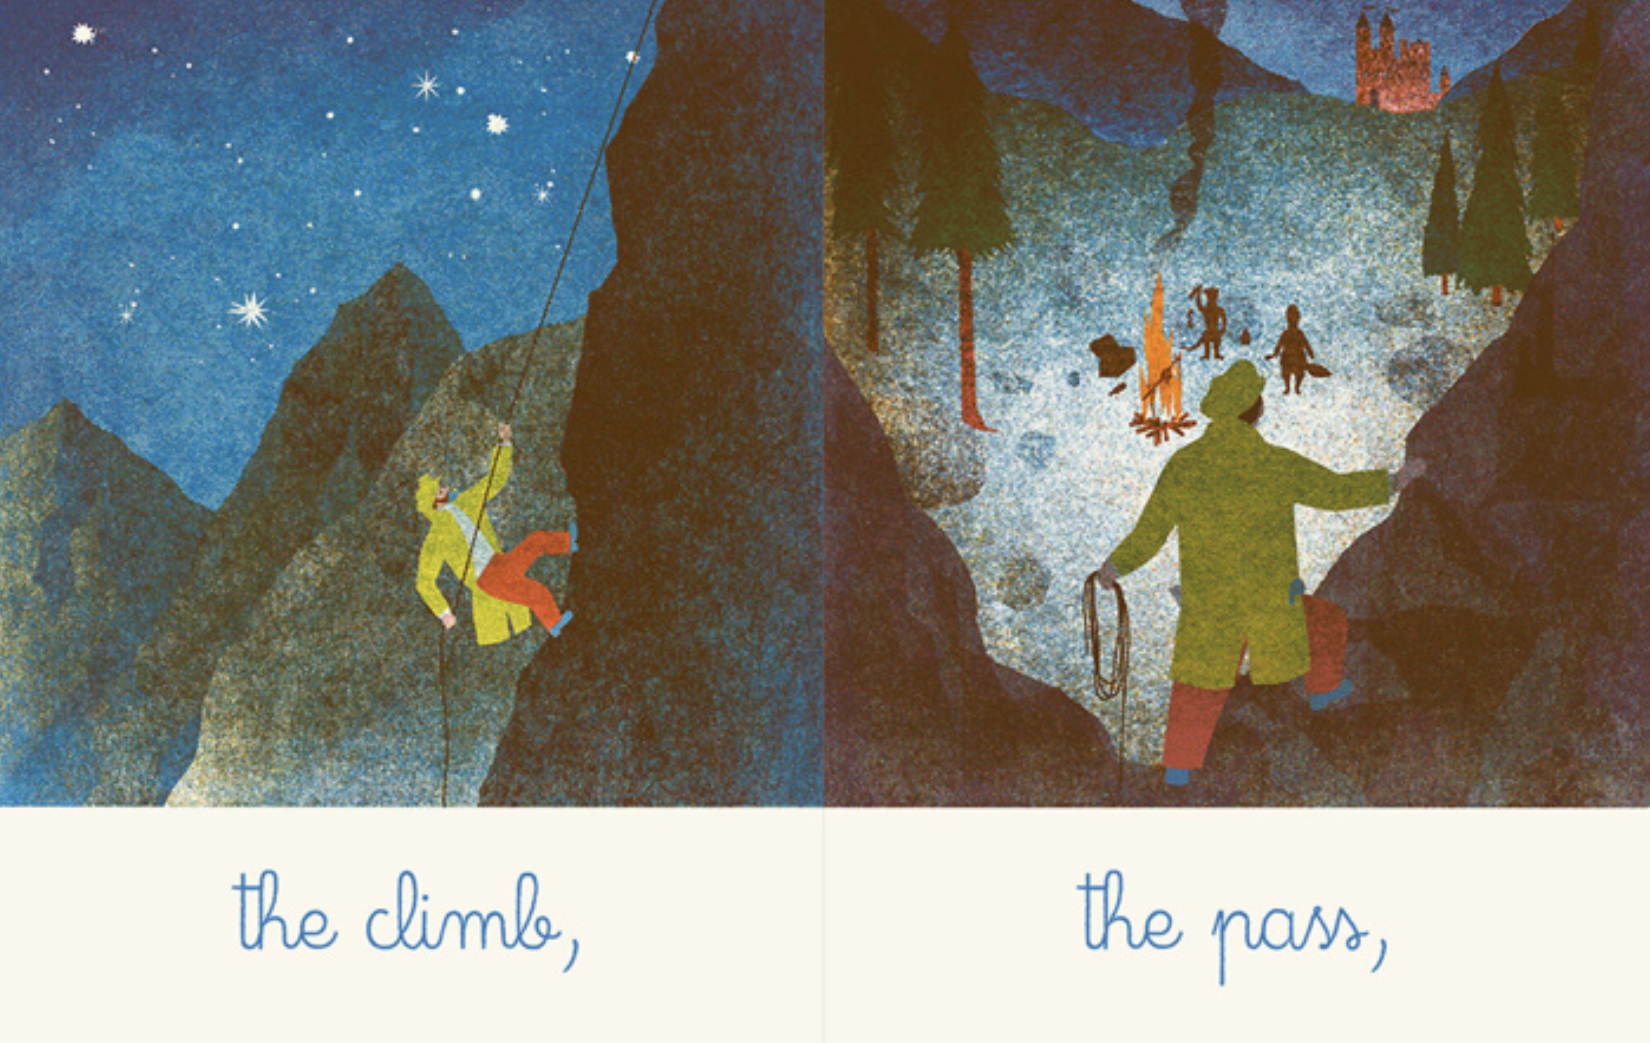 From Blexbolex's BALLAD, a New York Times Best Illustrated Children’s Book of 2013